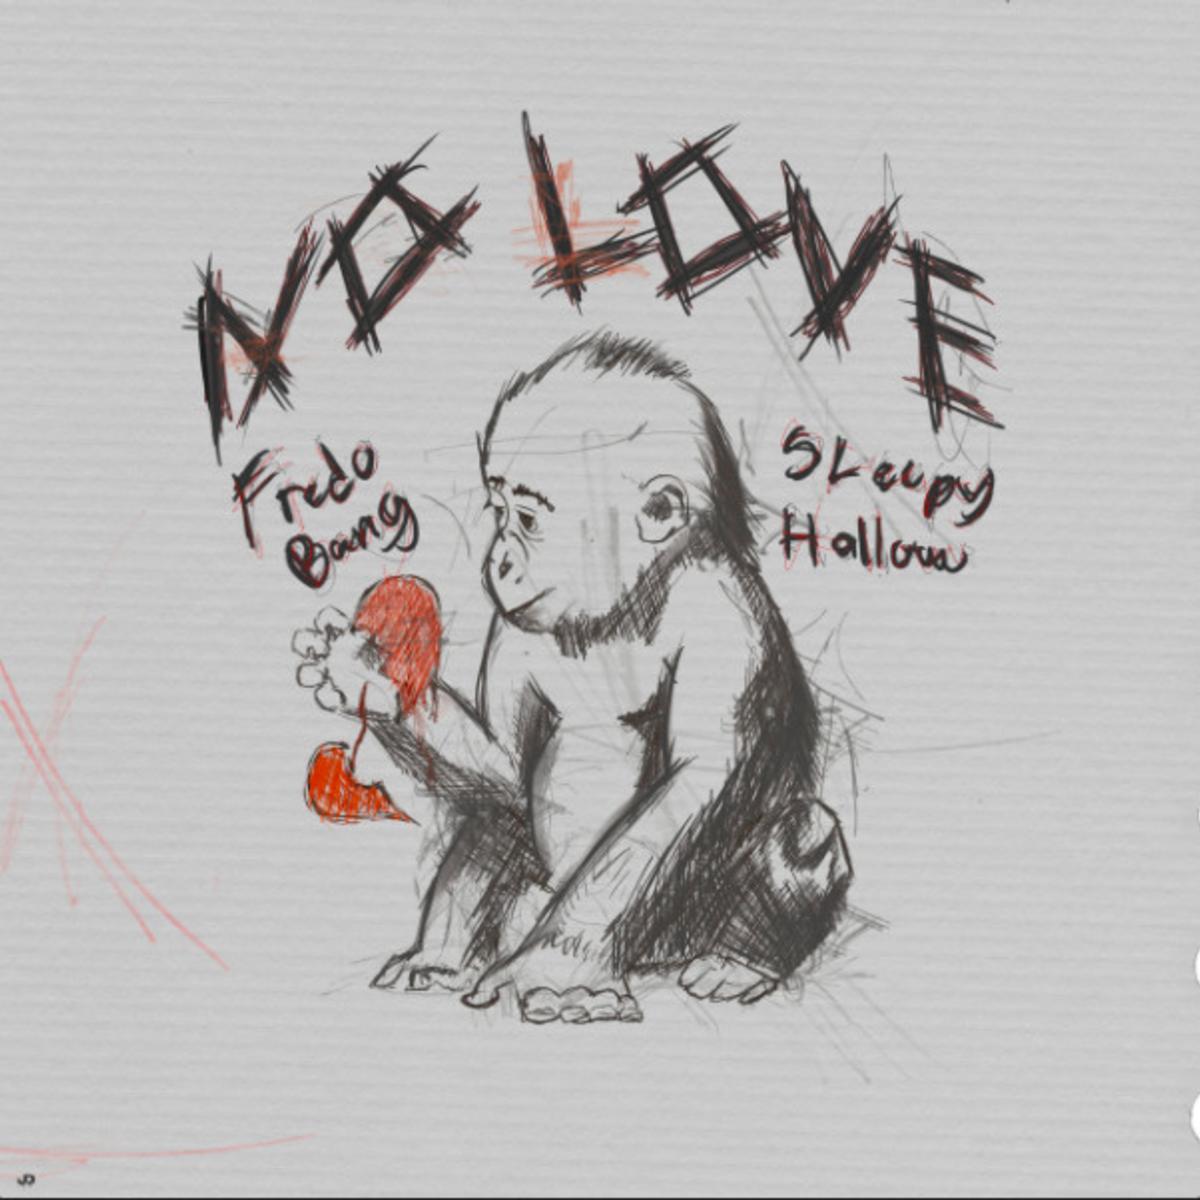 Fredo Bang Feat. Sleepy Hallow – “No Love” [Audio] 